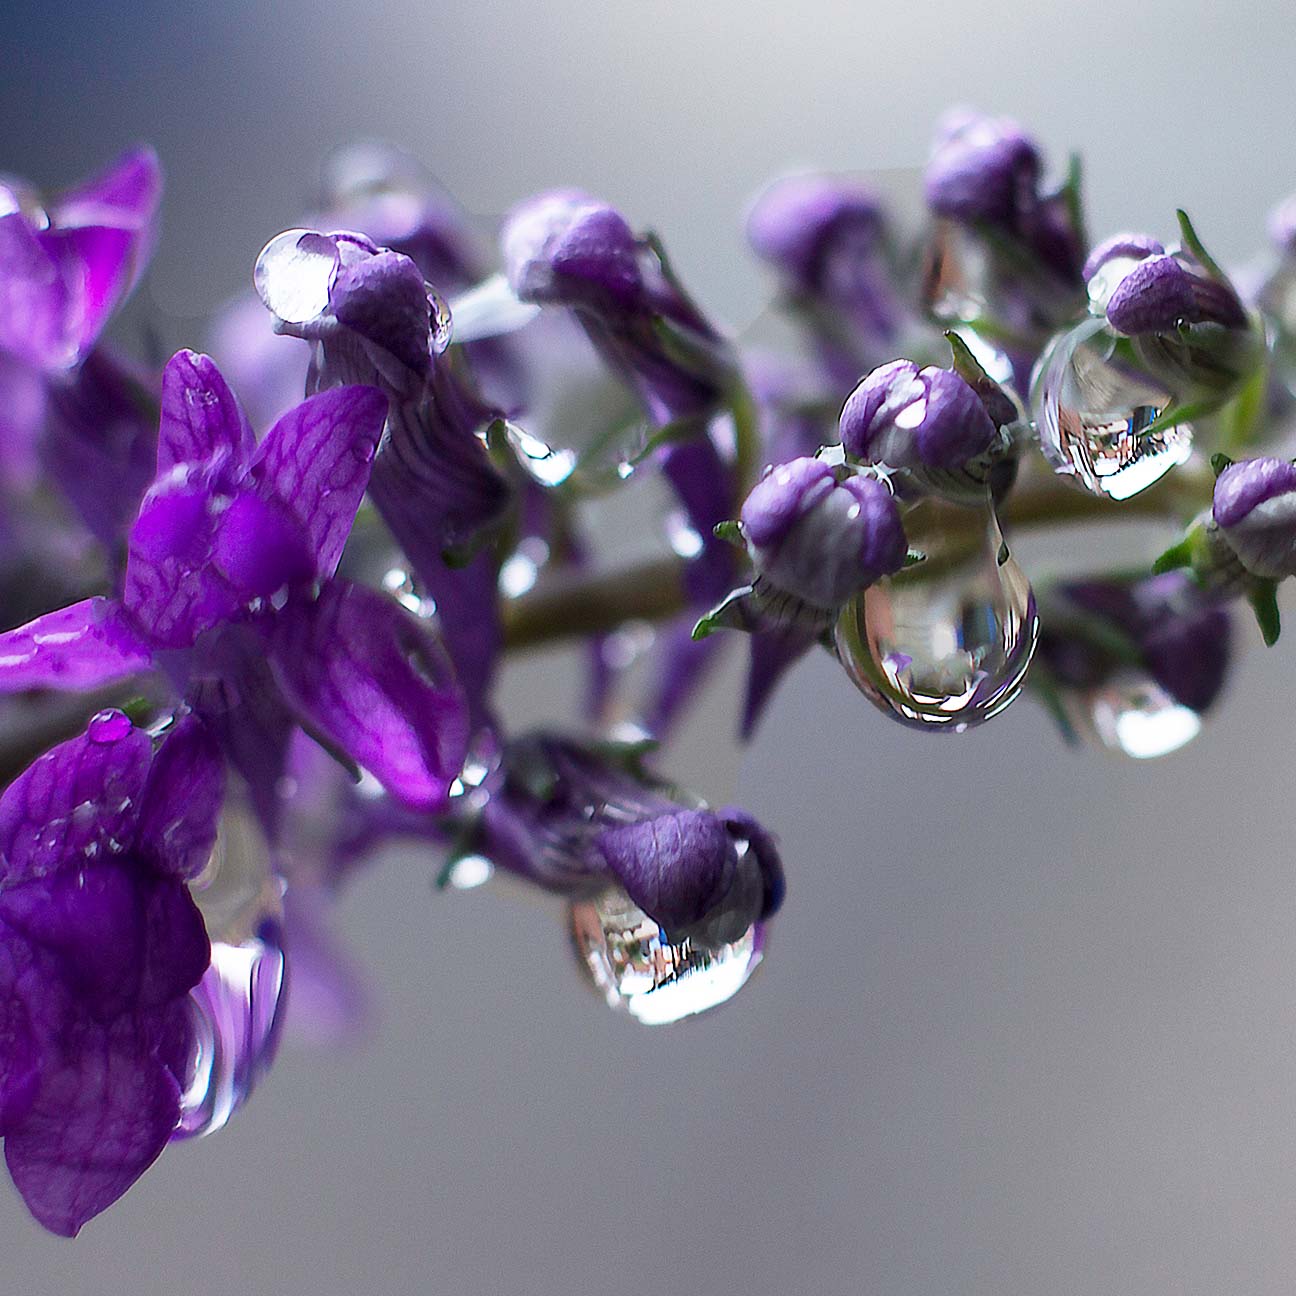 N Lavandula Angustifolia(Lavender) Water's thumbnail image